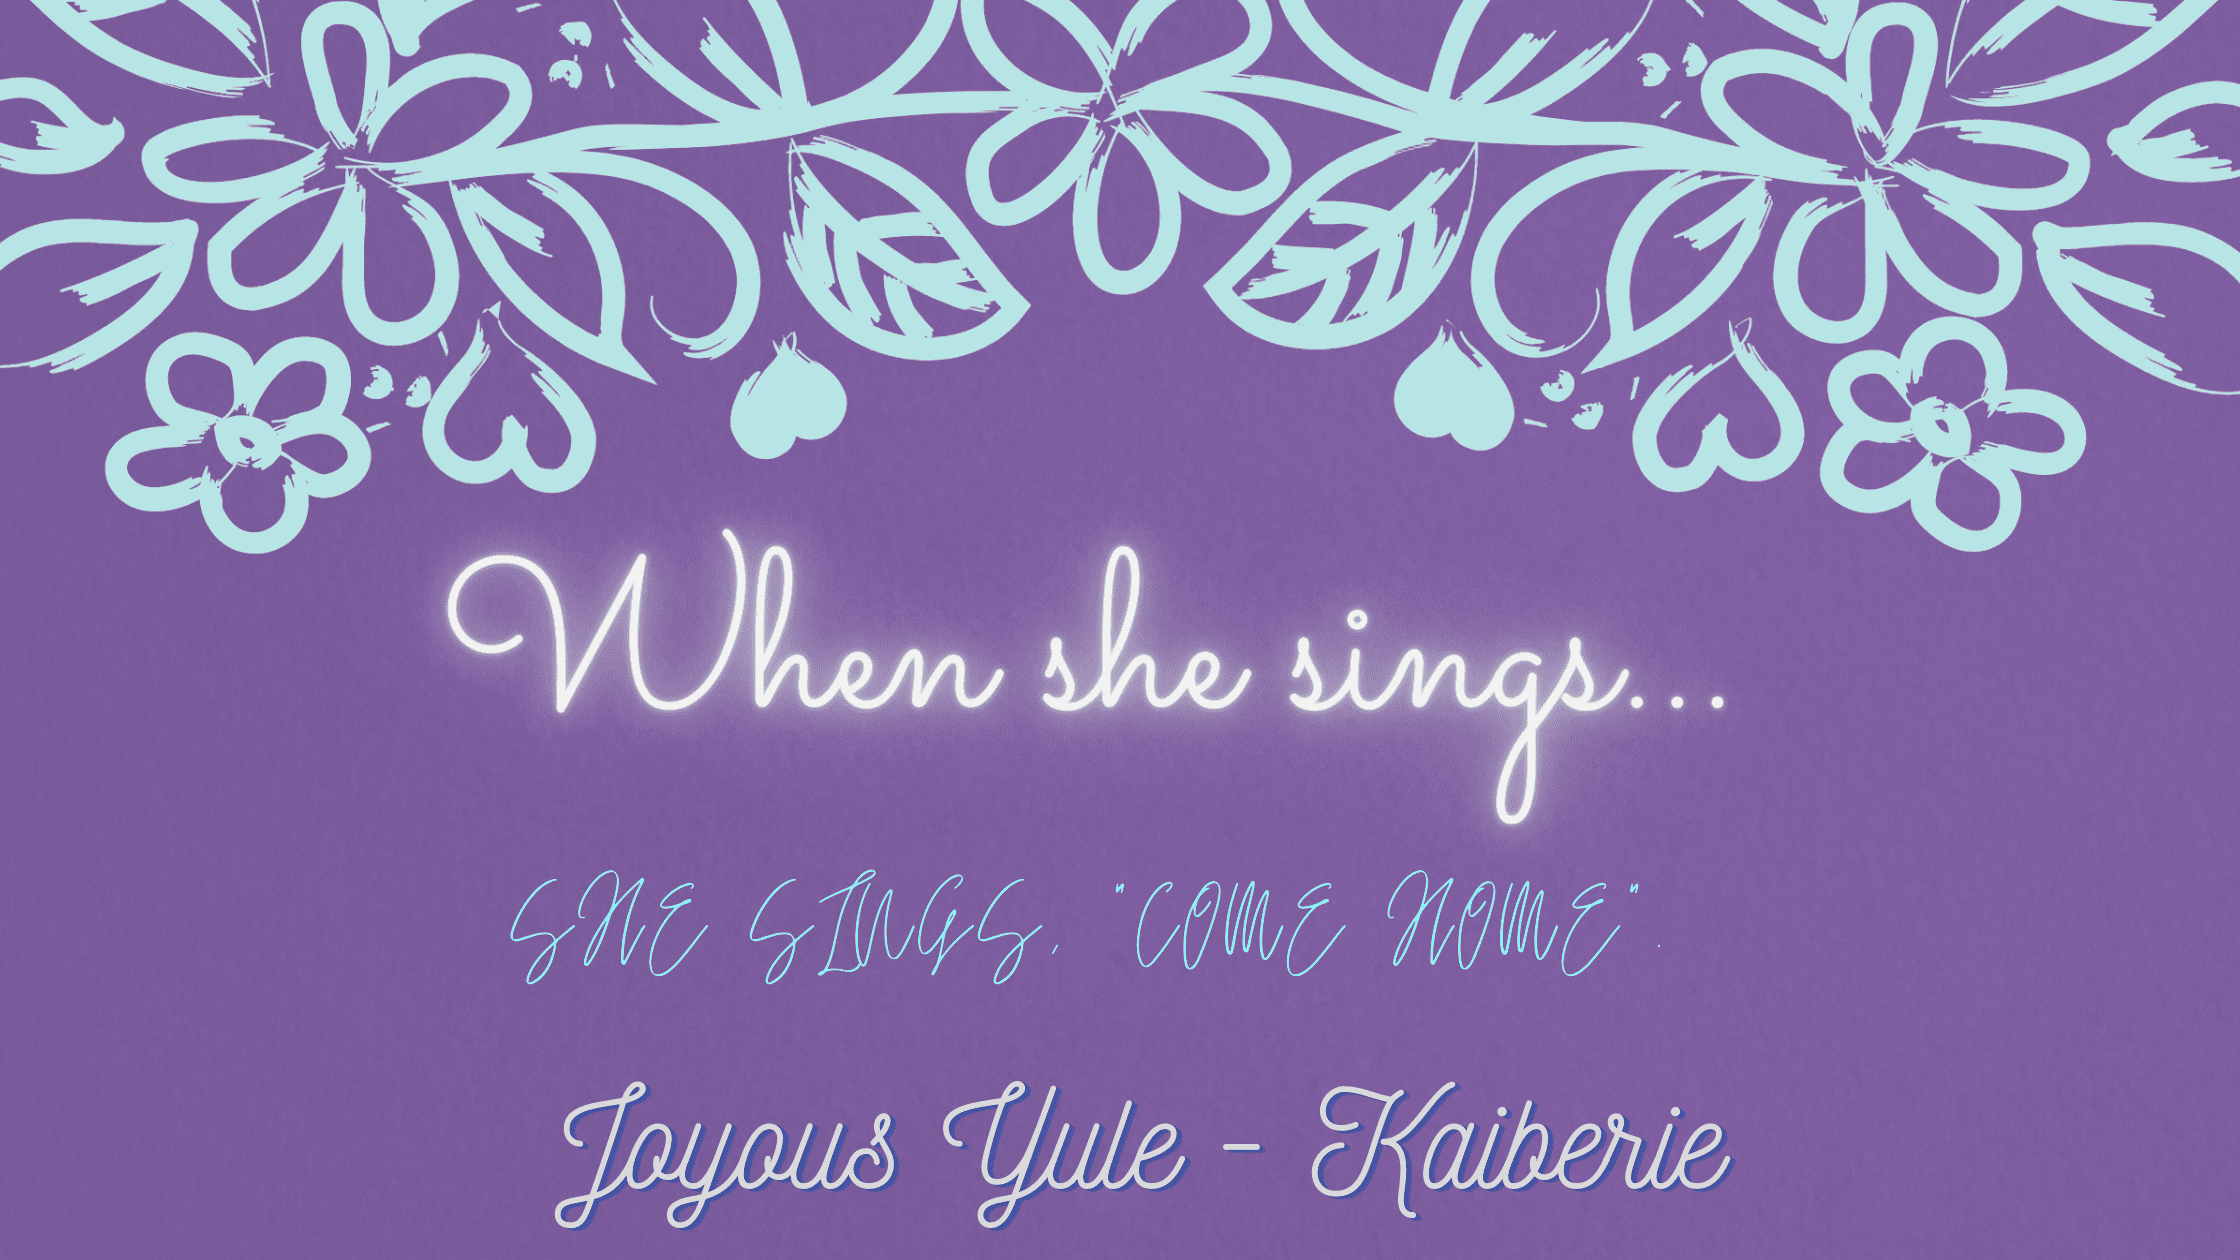 When she sing, she sings “Come home” #mondayblogs #rungirlrun